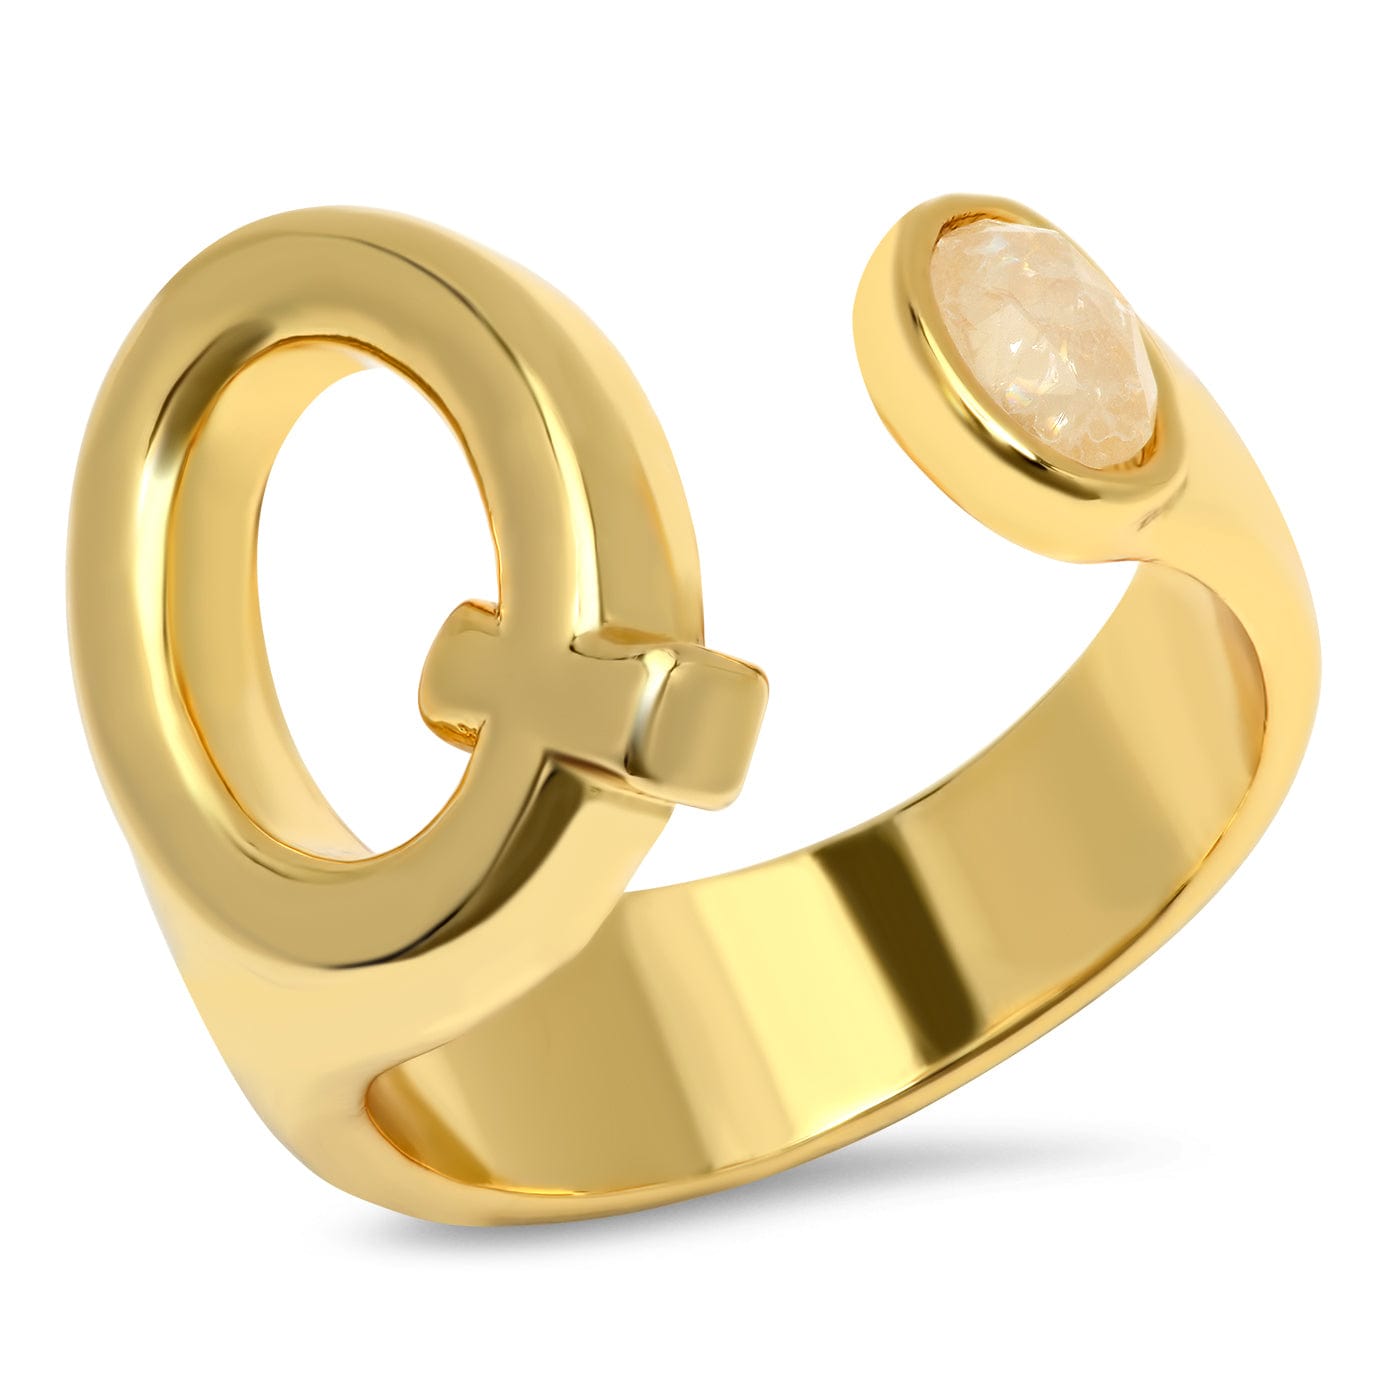 TAI JEWELRY Rings Q Initial Wrap Ring